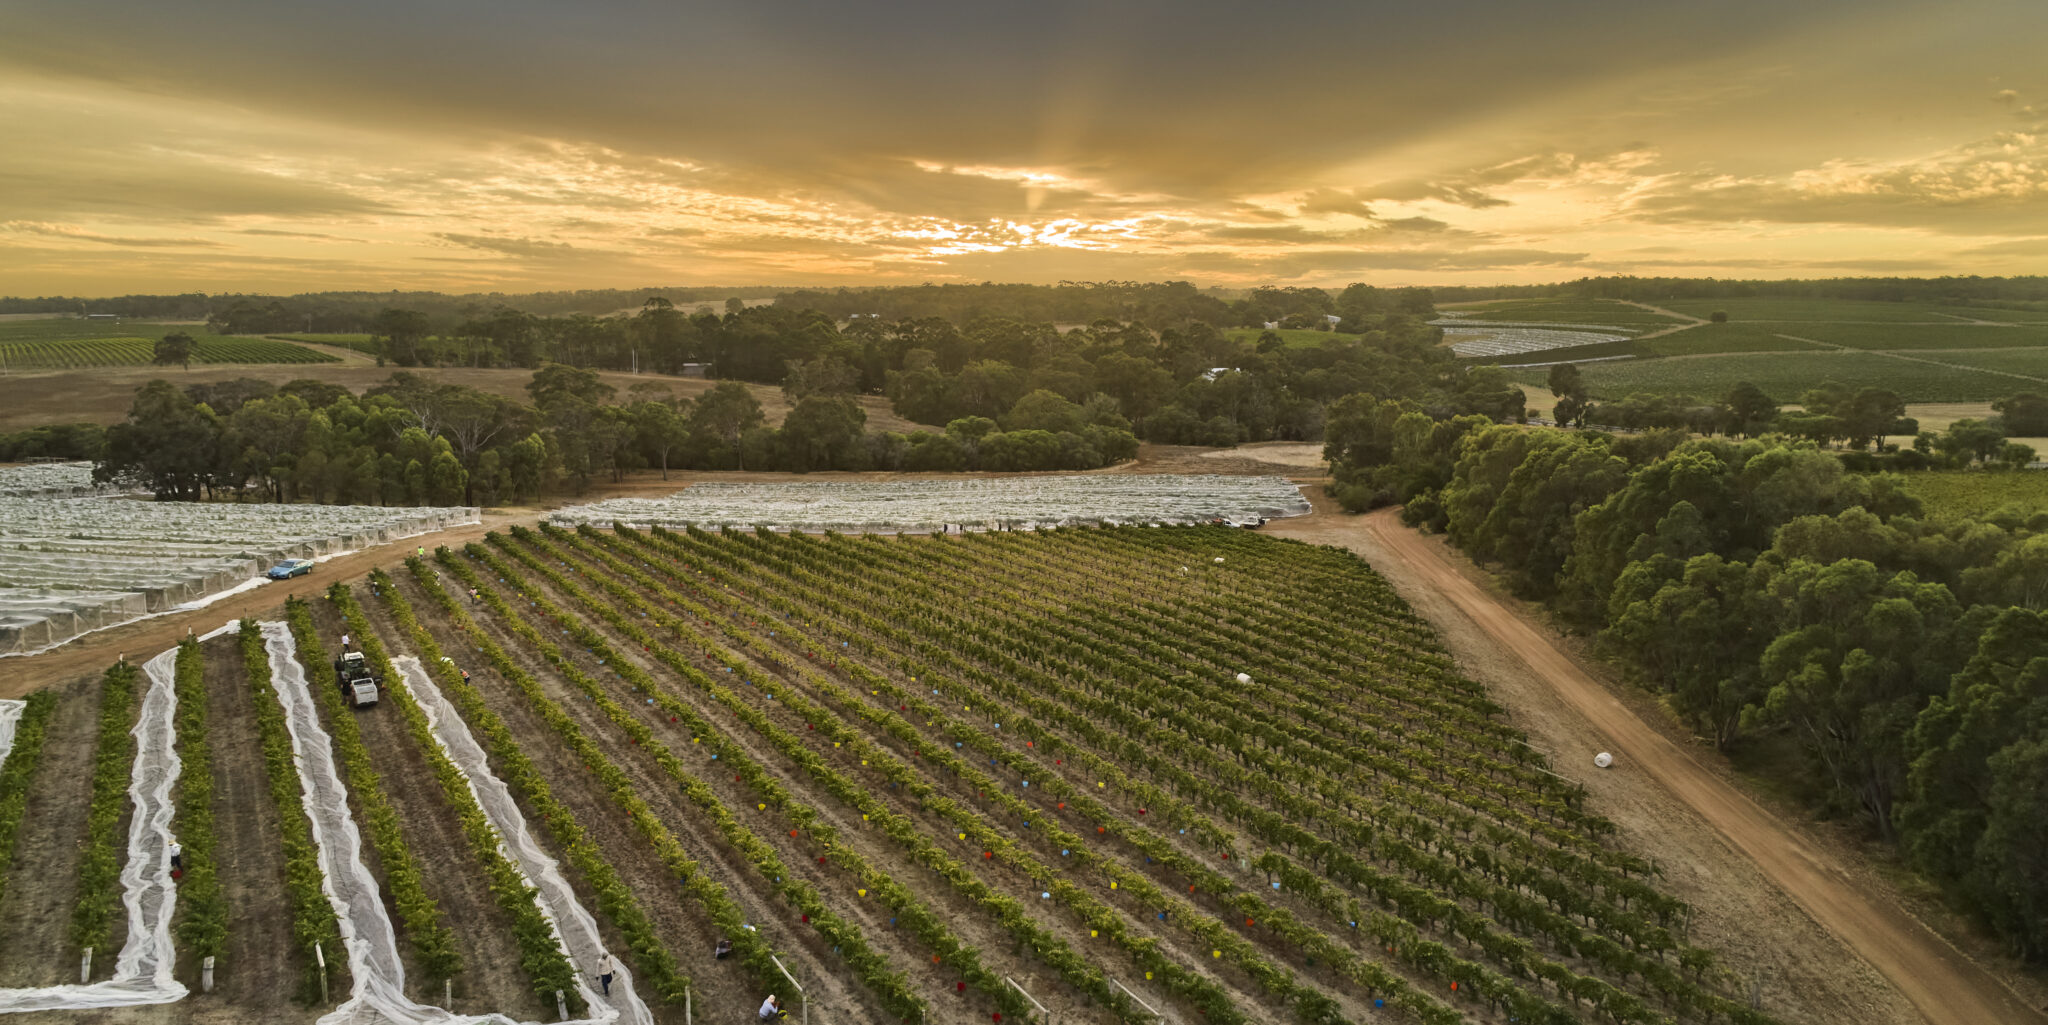 An aerial view of a vineyard